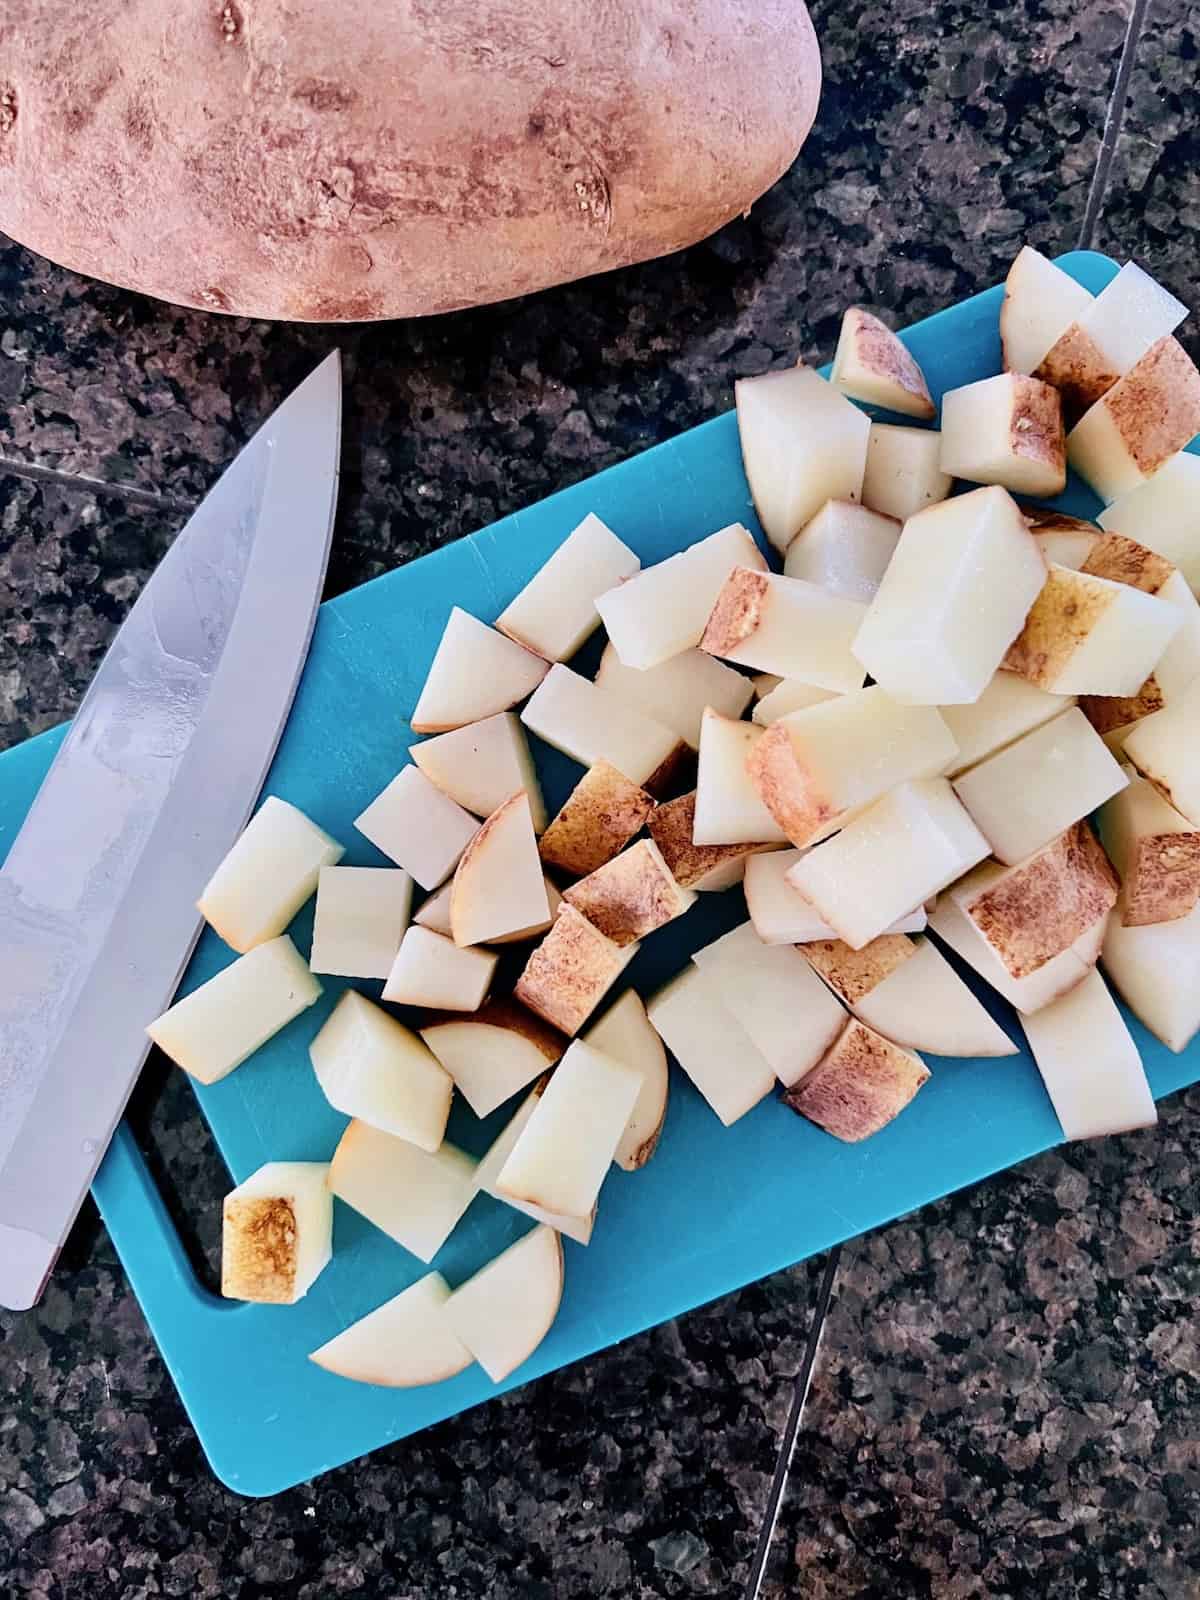 Cut cubes of potato on a cutting board.